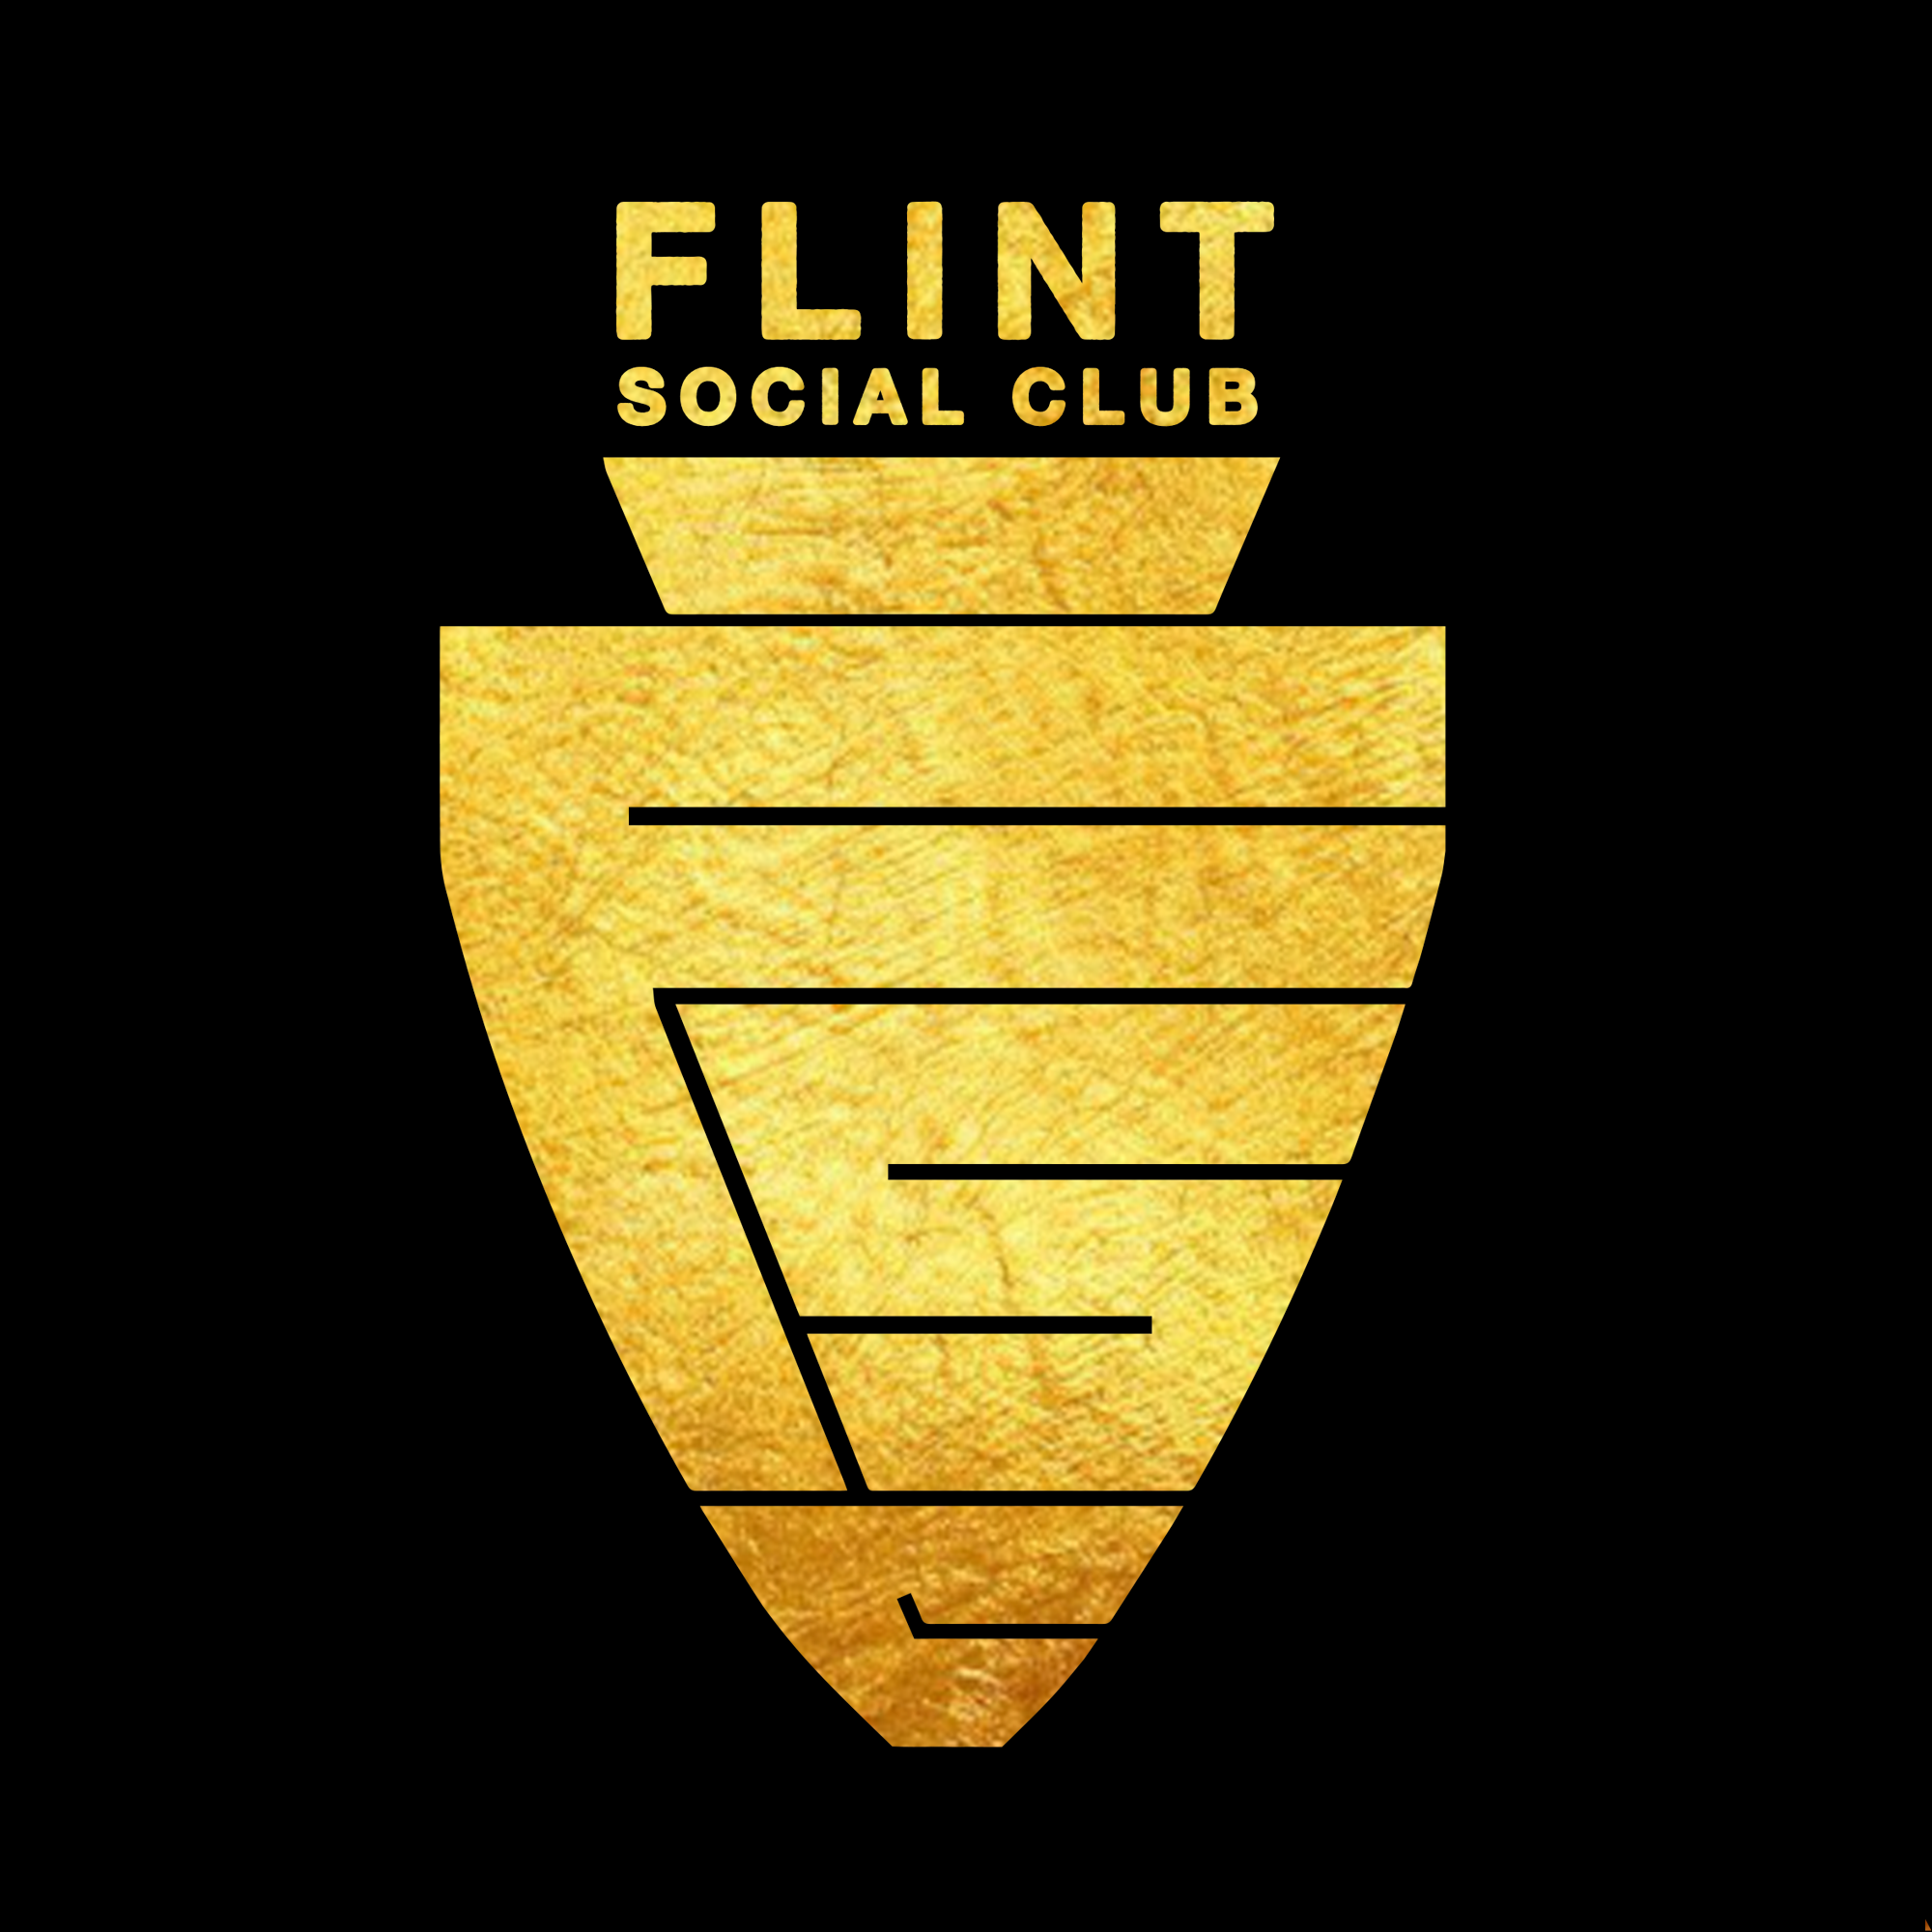 FlintSocialClub-Gold_leaf-SocialMedia_vesselTXT1